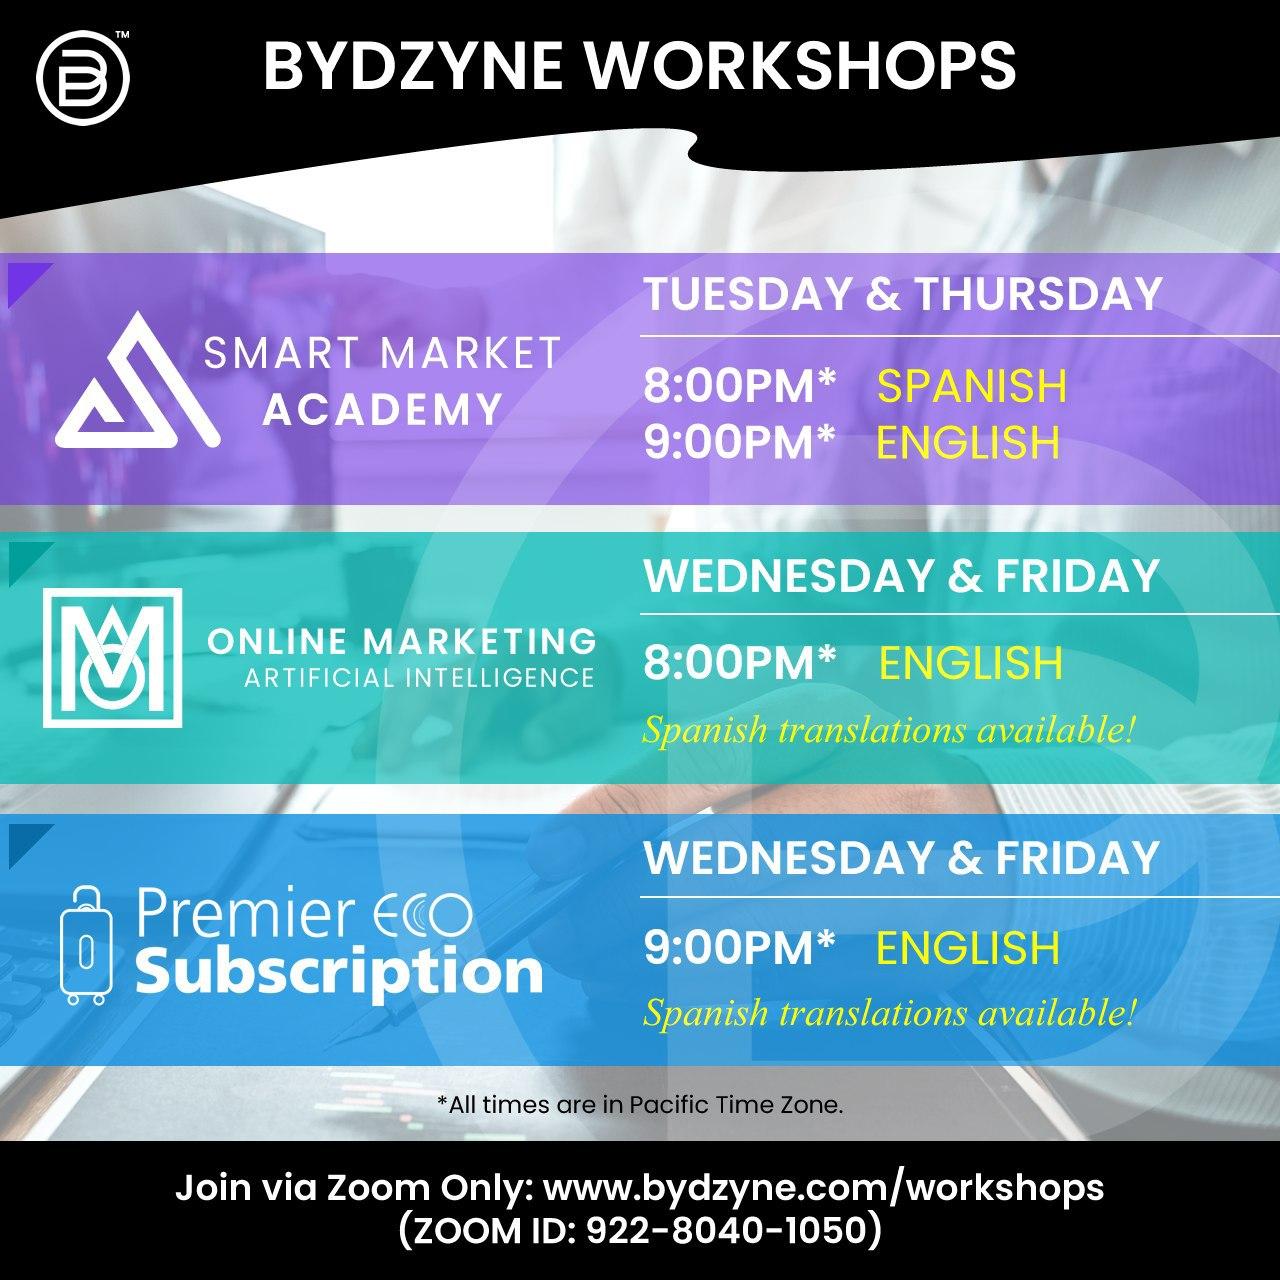 ByDzyne Weekly Workshops start next week!